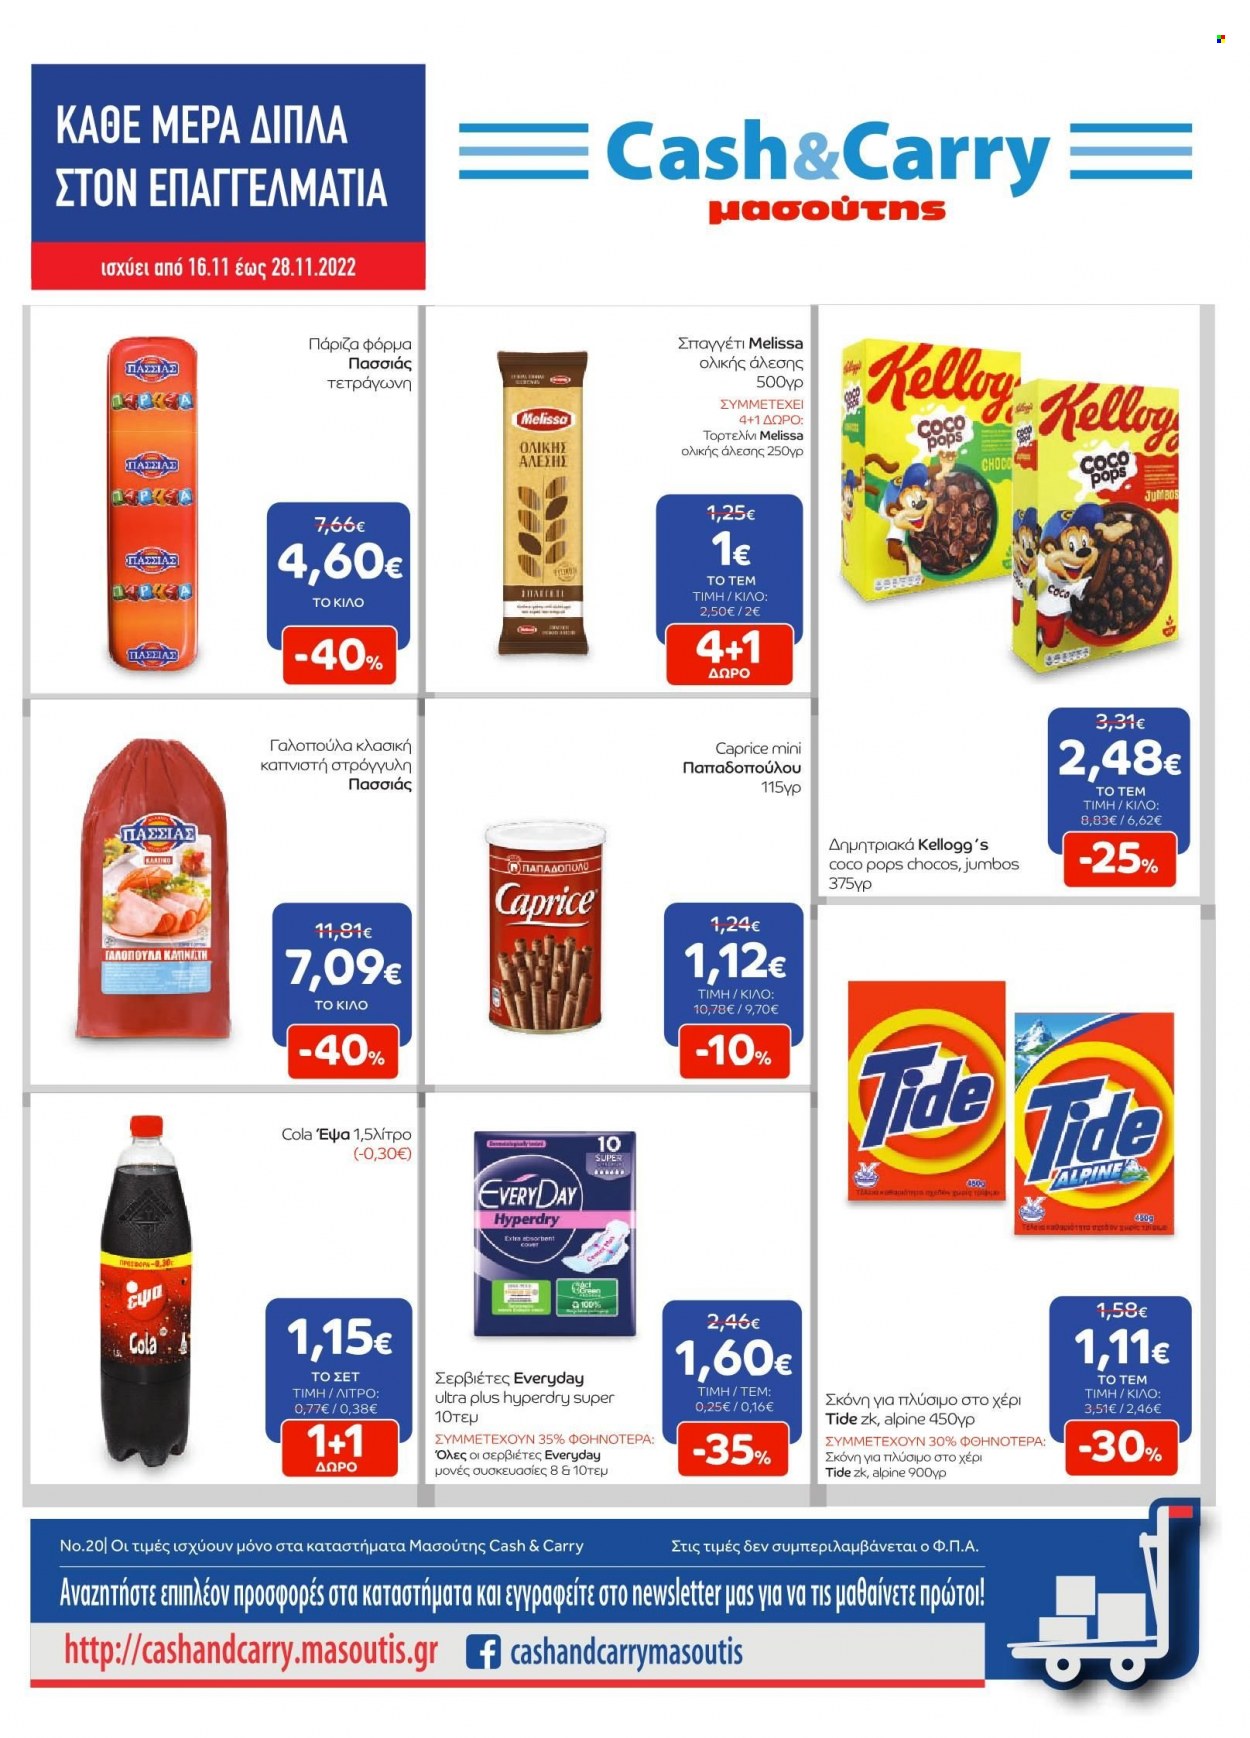 thumbnail - Φυλλάδια Masoutis Cash & Carry - 16.11.2022 - 28.11.2022 - Εκπτωτικά προϊόντα - γαλοπούλα, coco pops, Kellogg's, every day, σερβιέτες. Σελίδα 1.